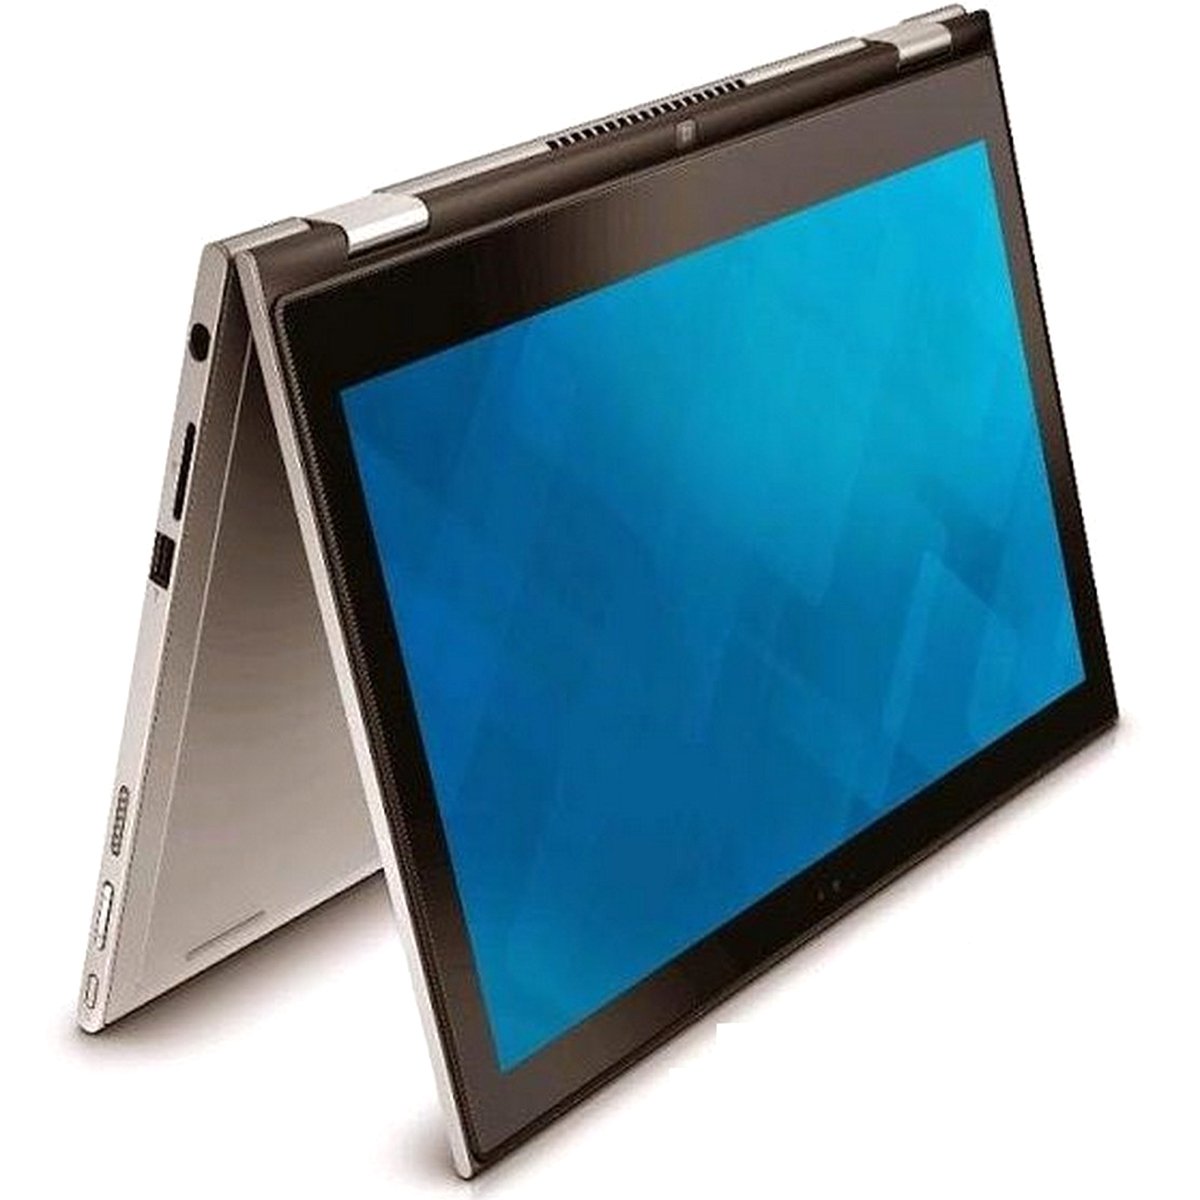 Dell Notebook 5370-INS-1153 Core i5 Silver